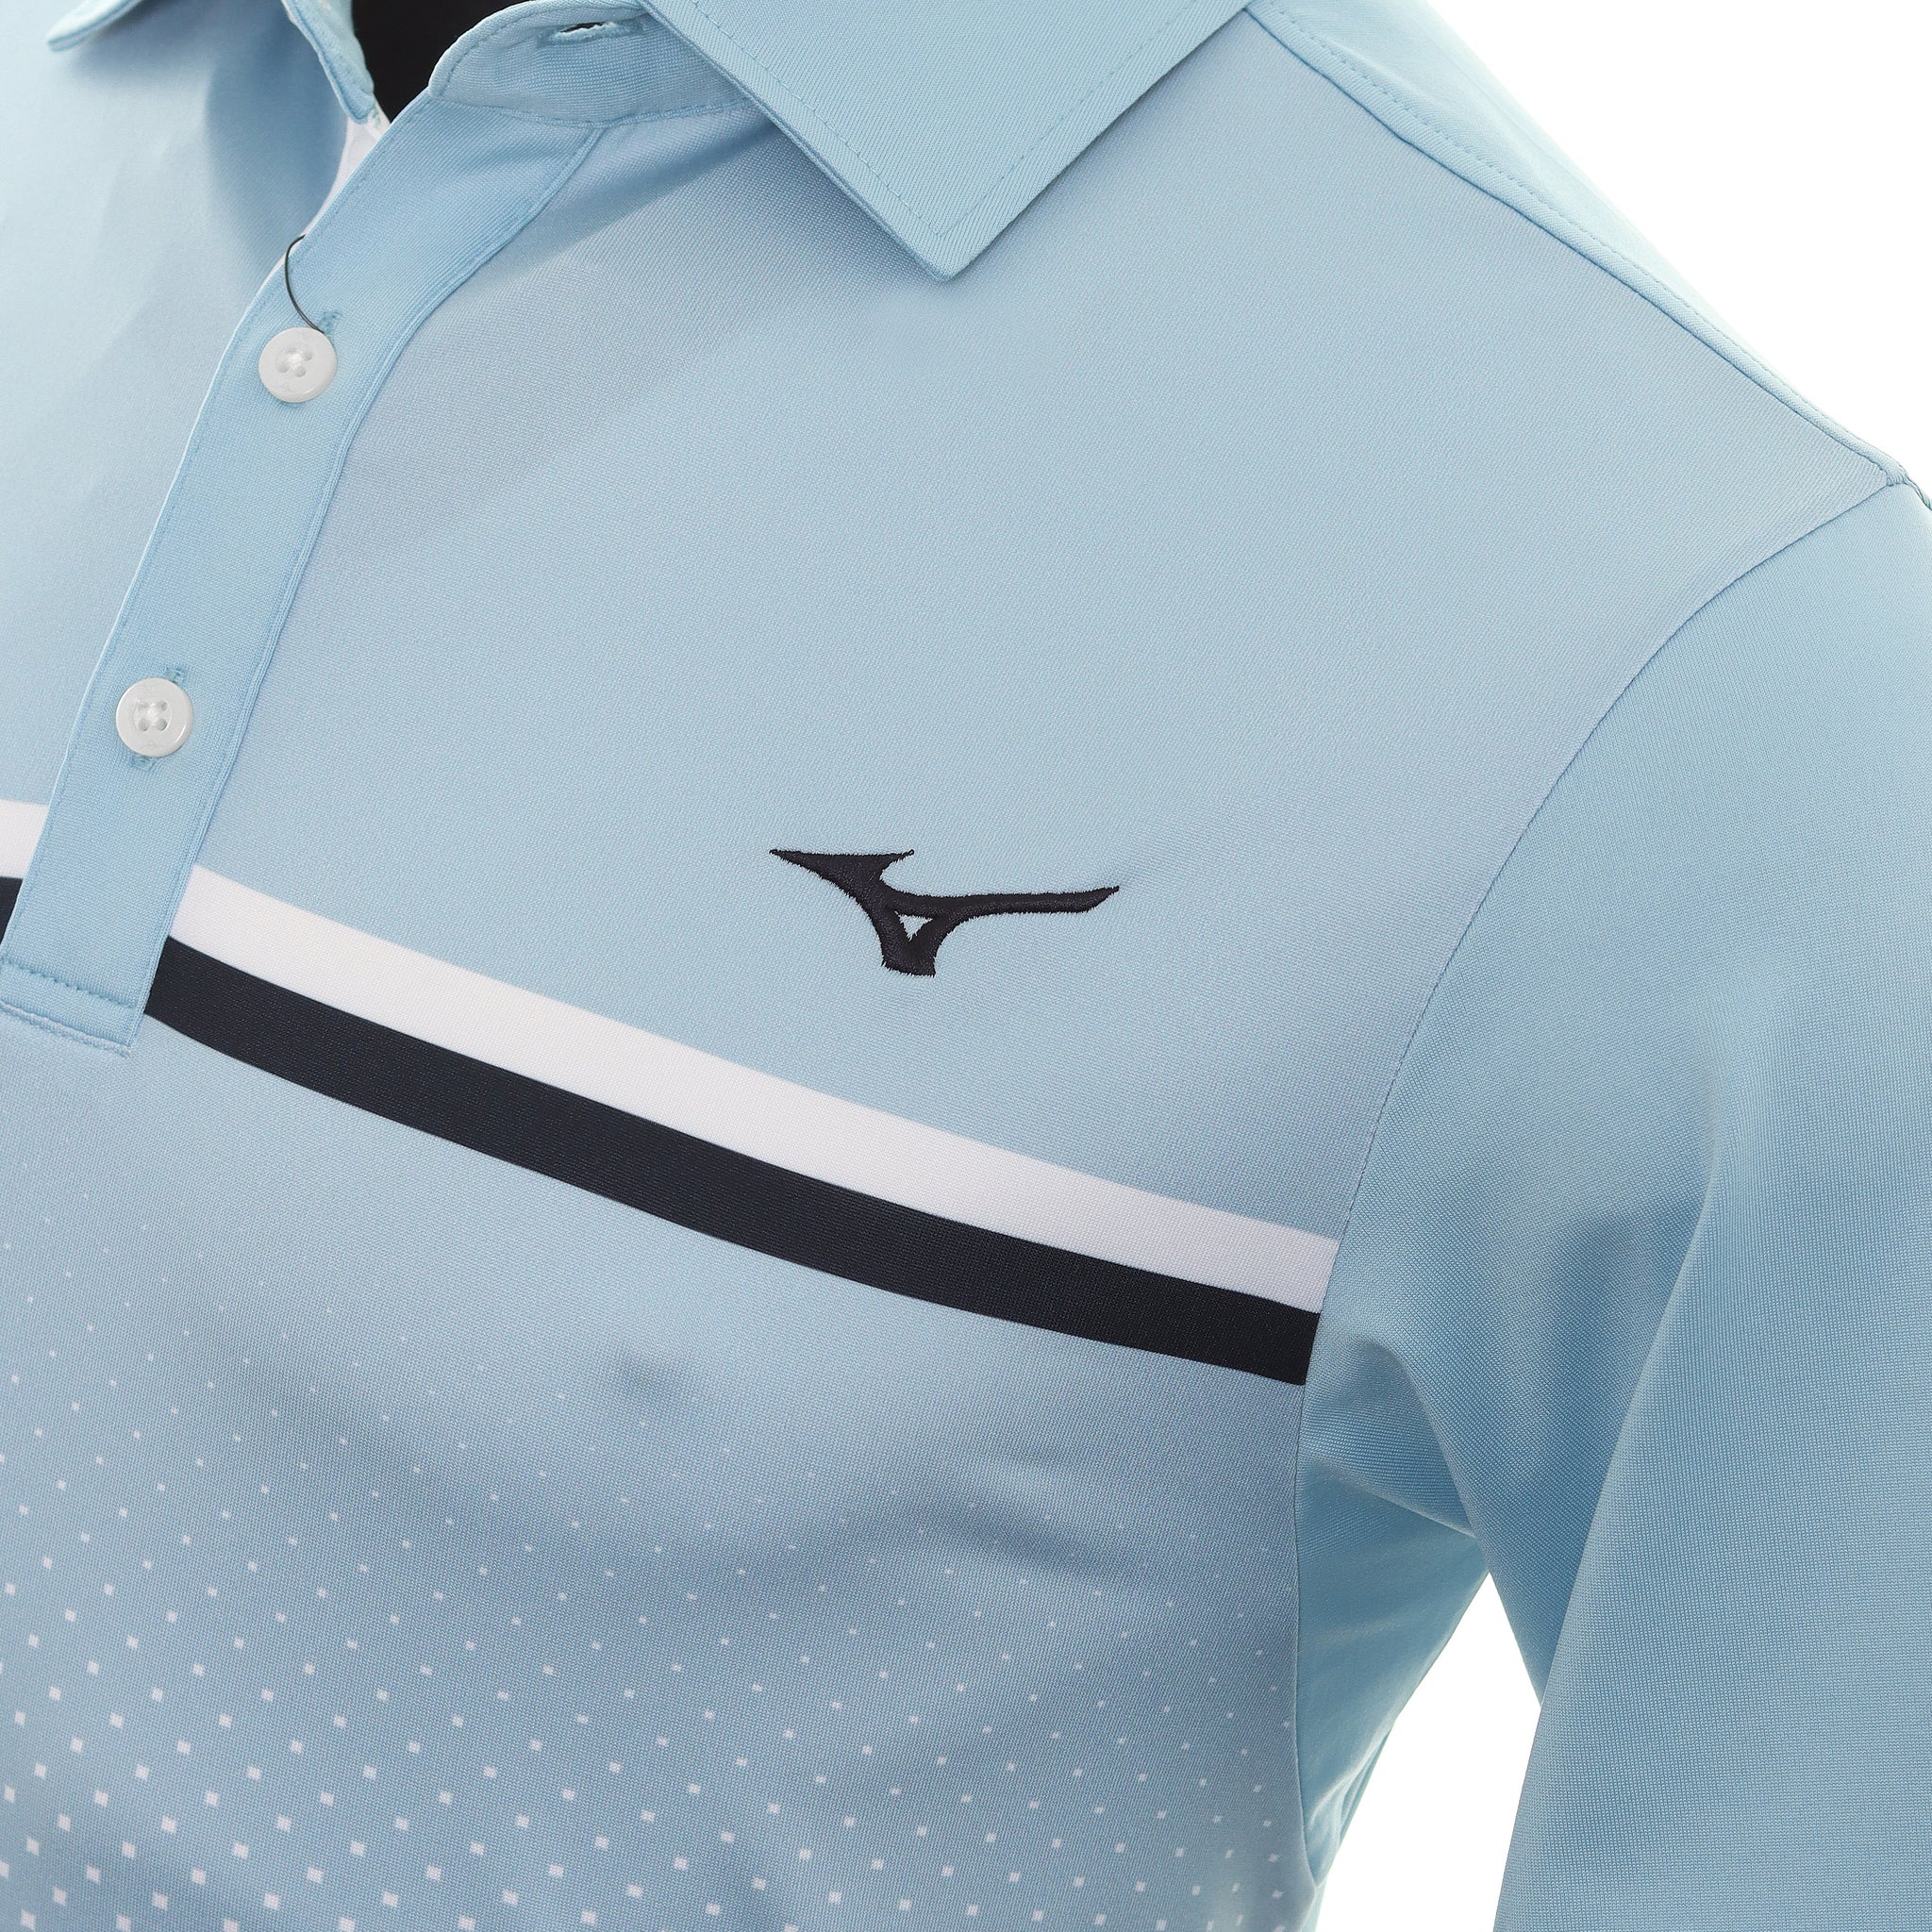 mizuno-golf-quick-dry-elite-gradient-shirt-52ga2010-light-blue-19